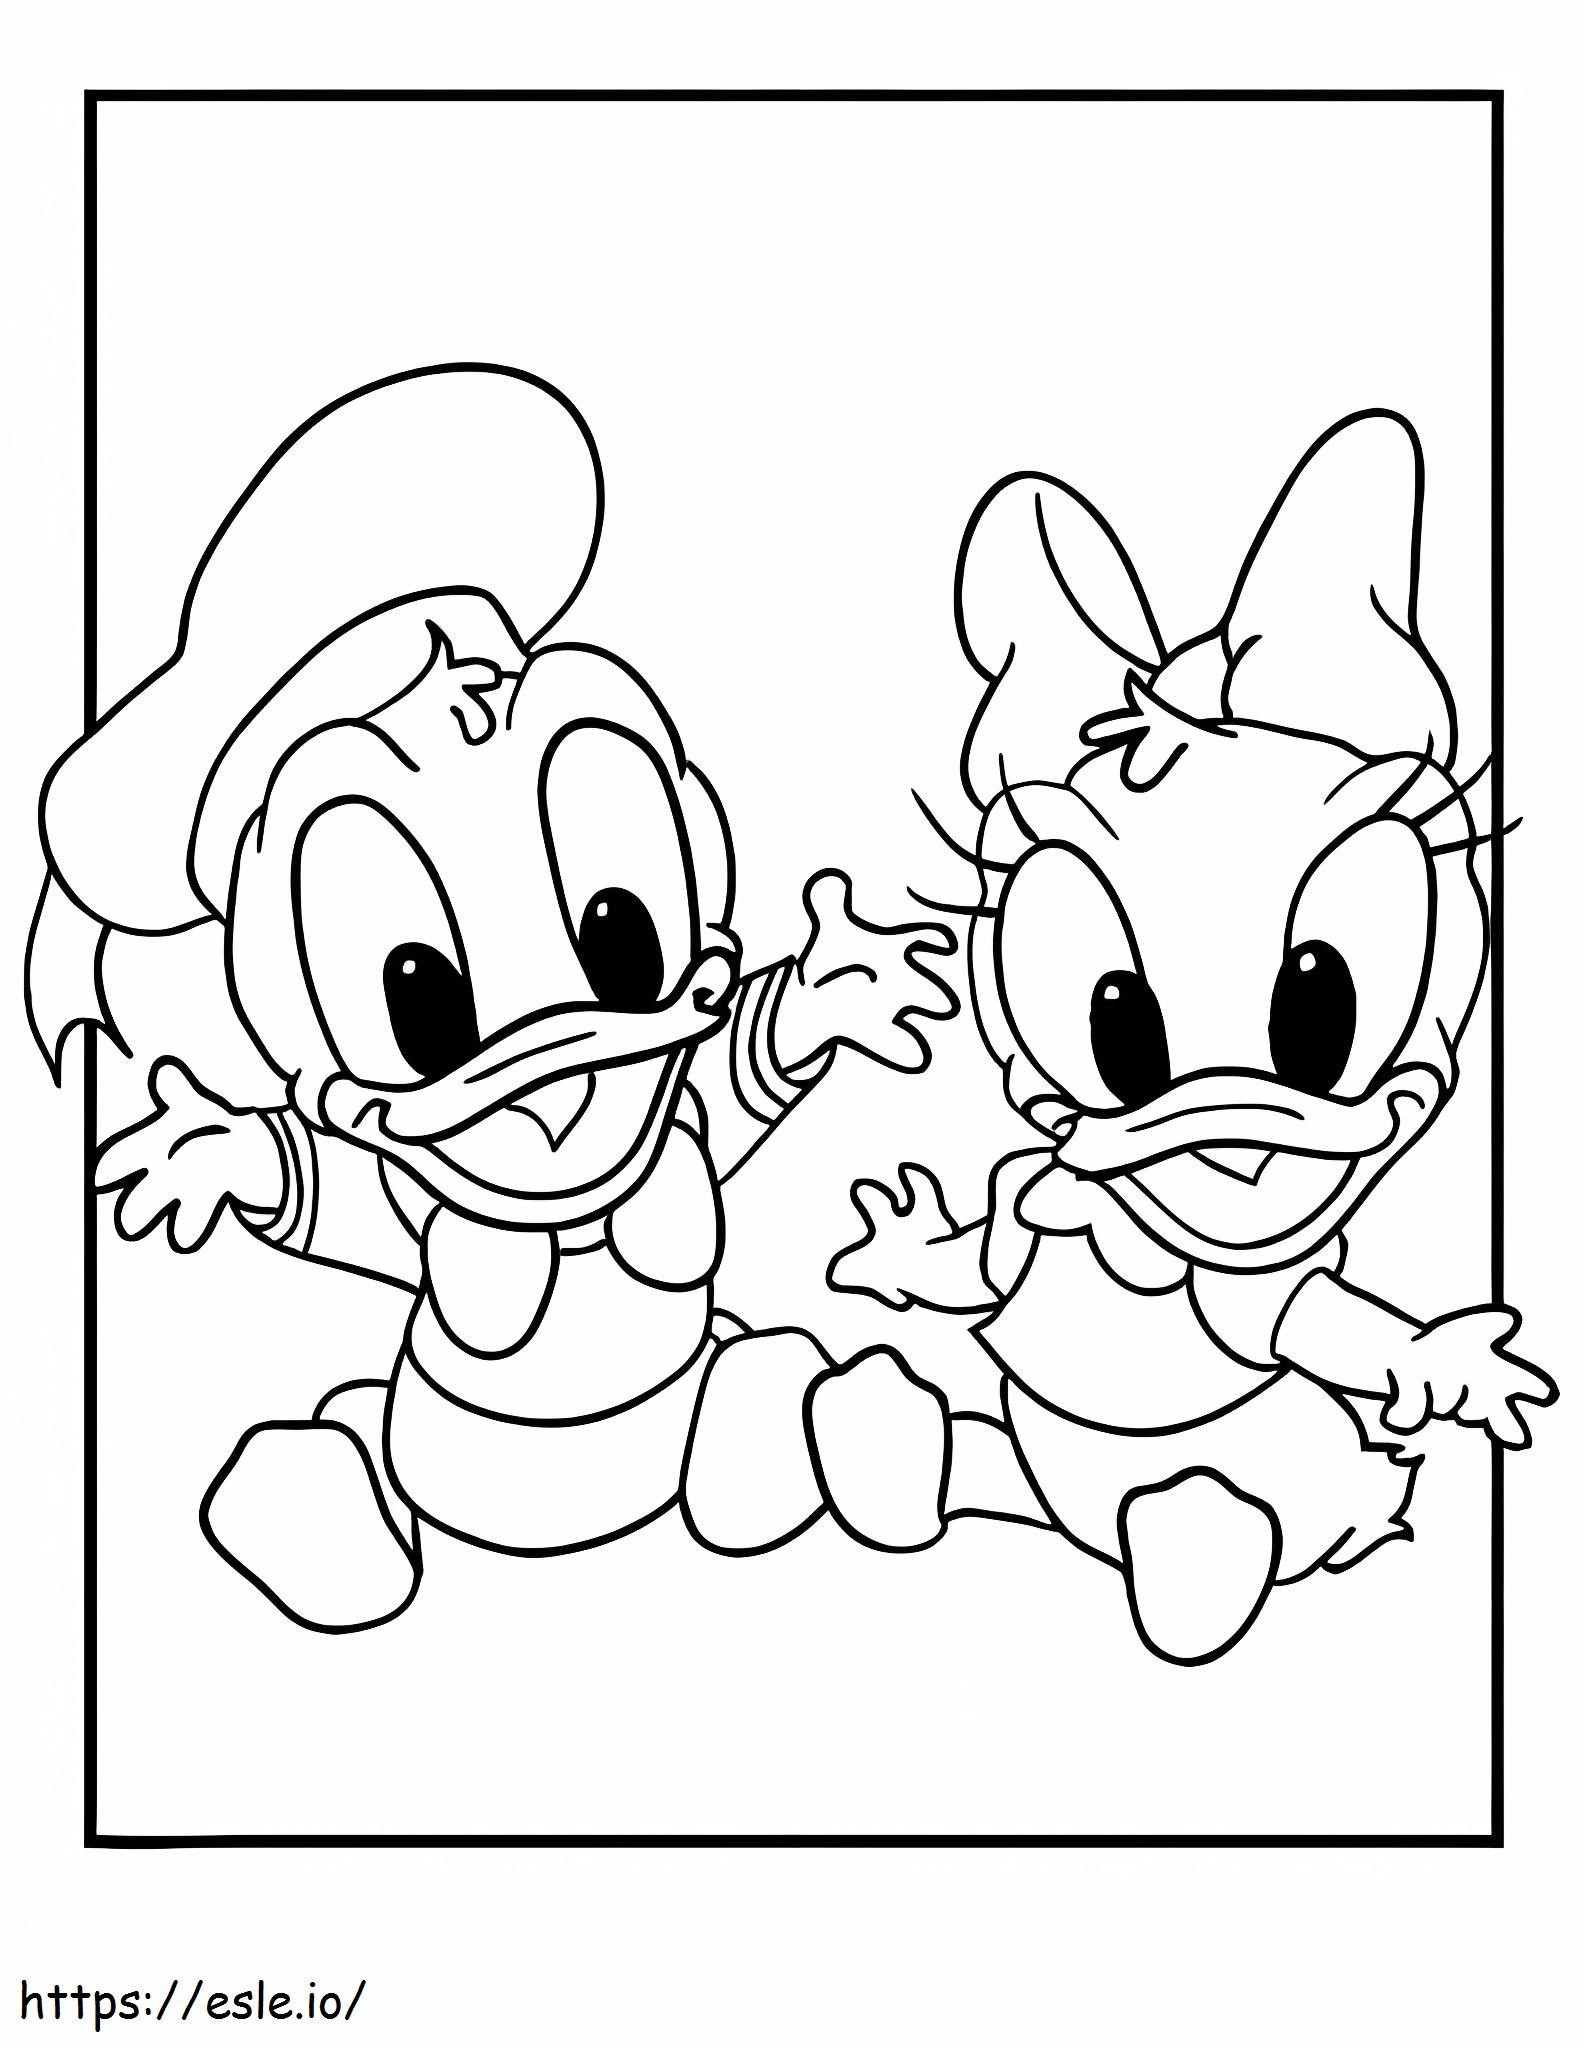 Baby Daisy Duck și Donald Duck de colorat